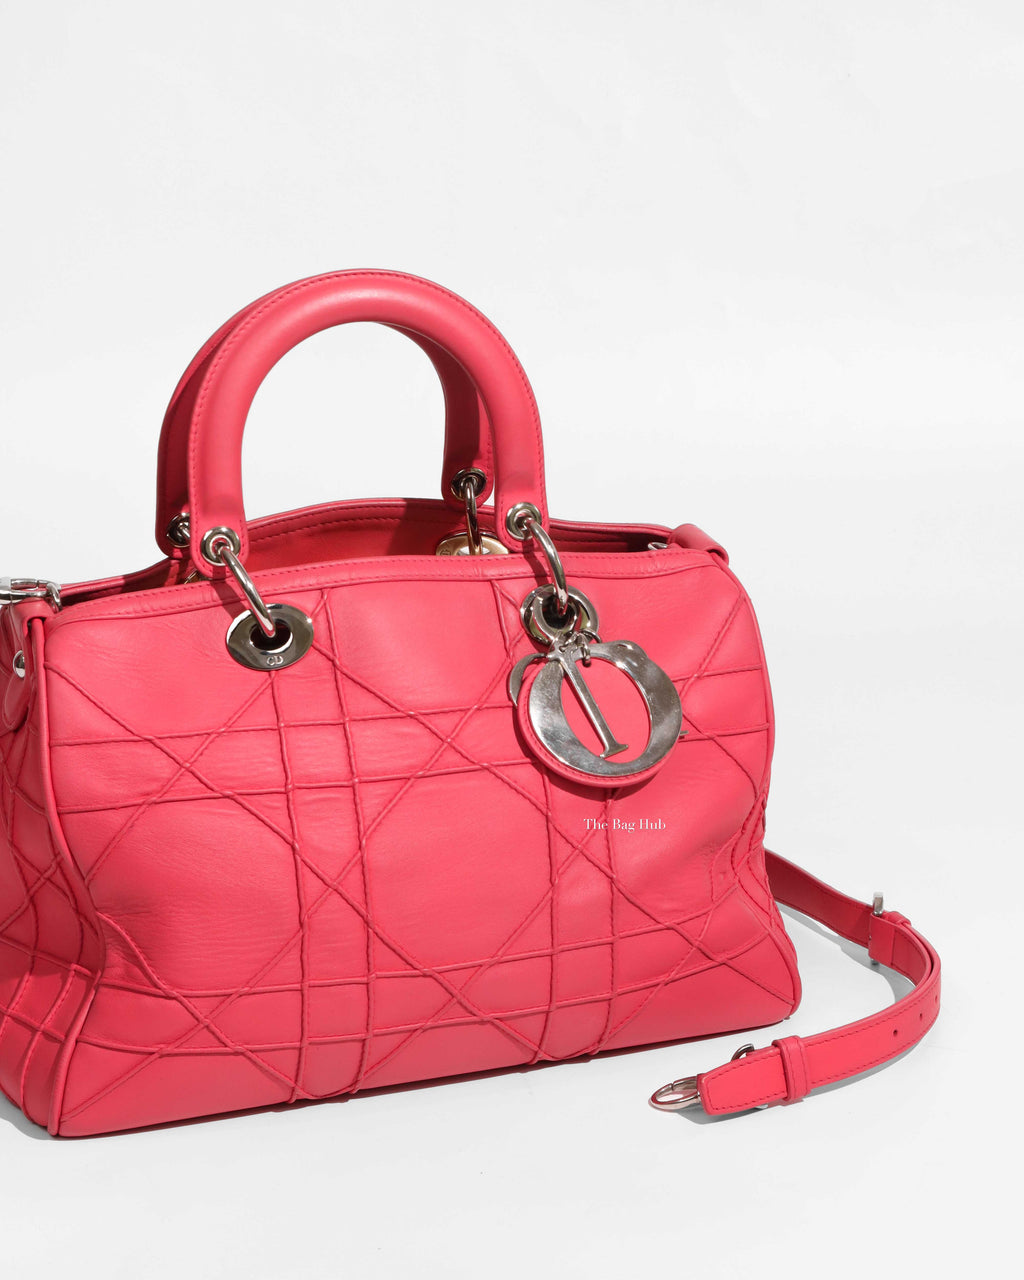 Princess Dianas favourite Dior bag gets a dazzling artistic update  Tatler